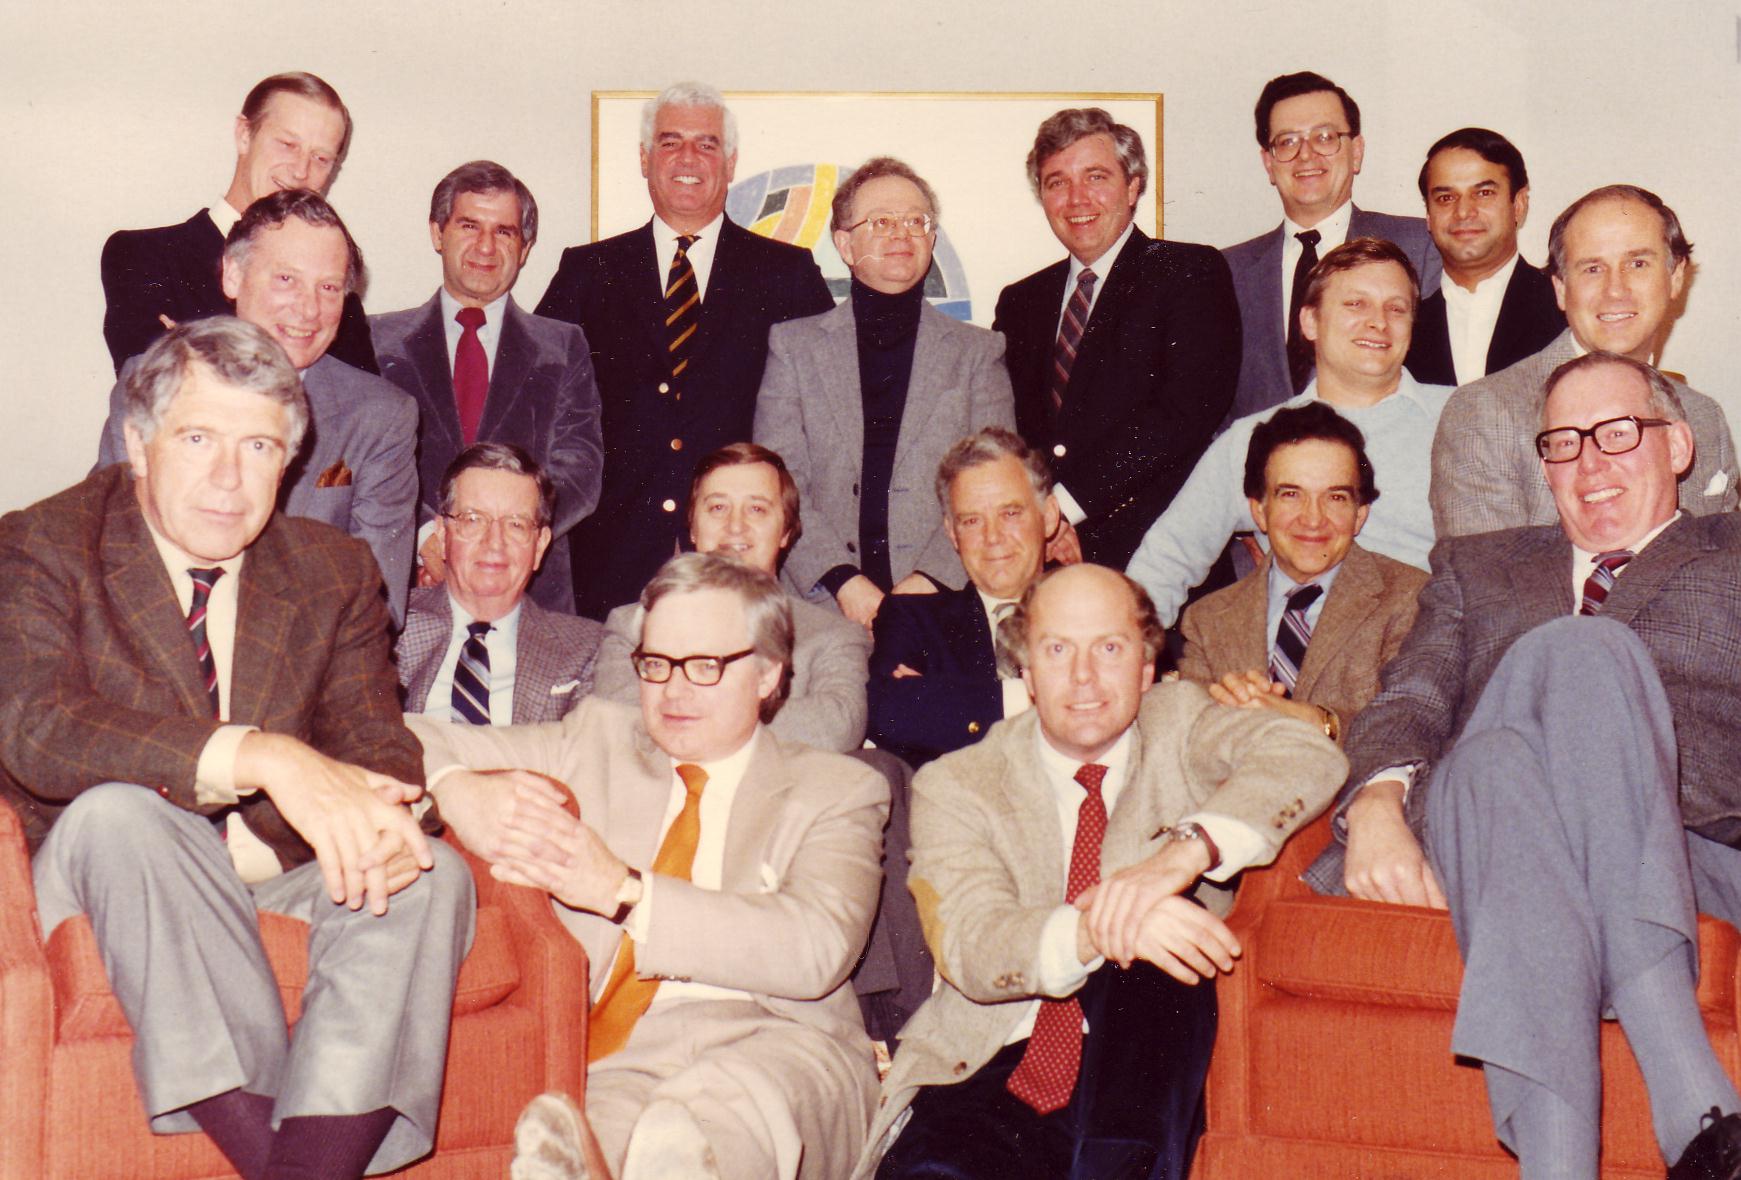 a group photograph of 18 men